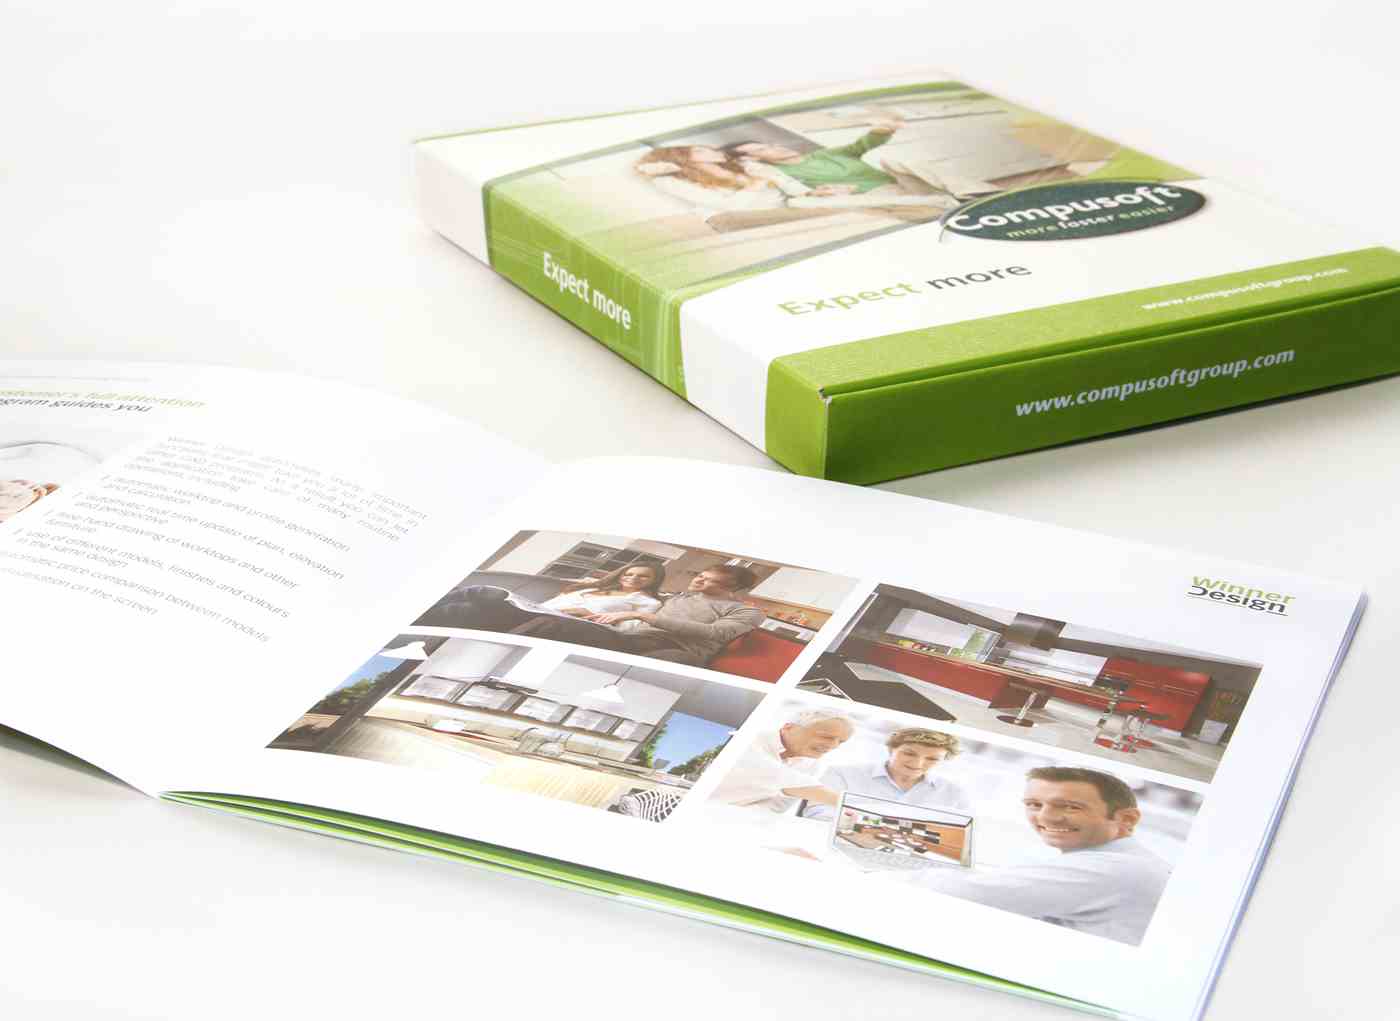 Compusoft softwarebox and brochure